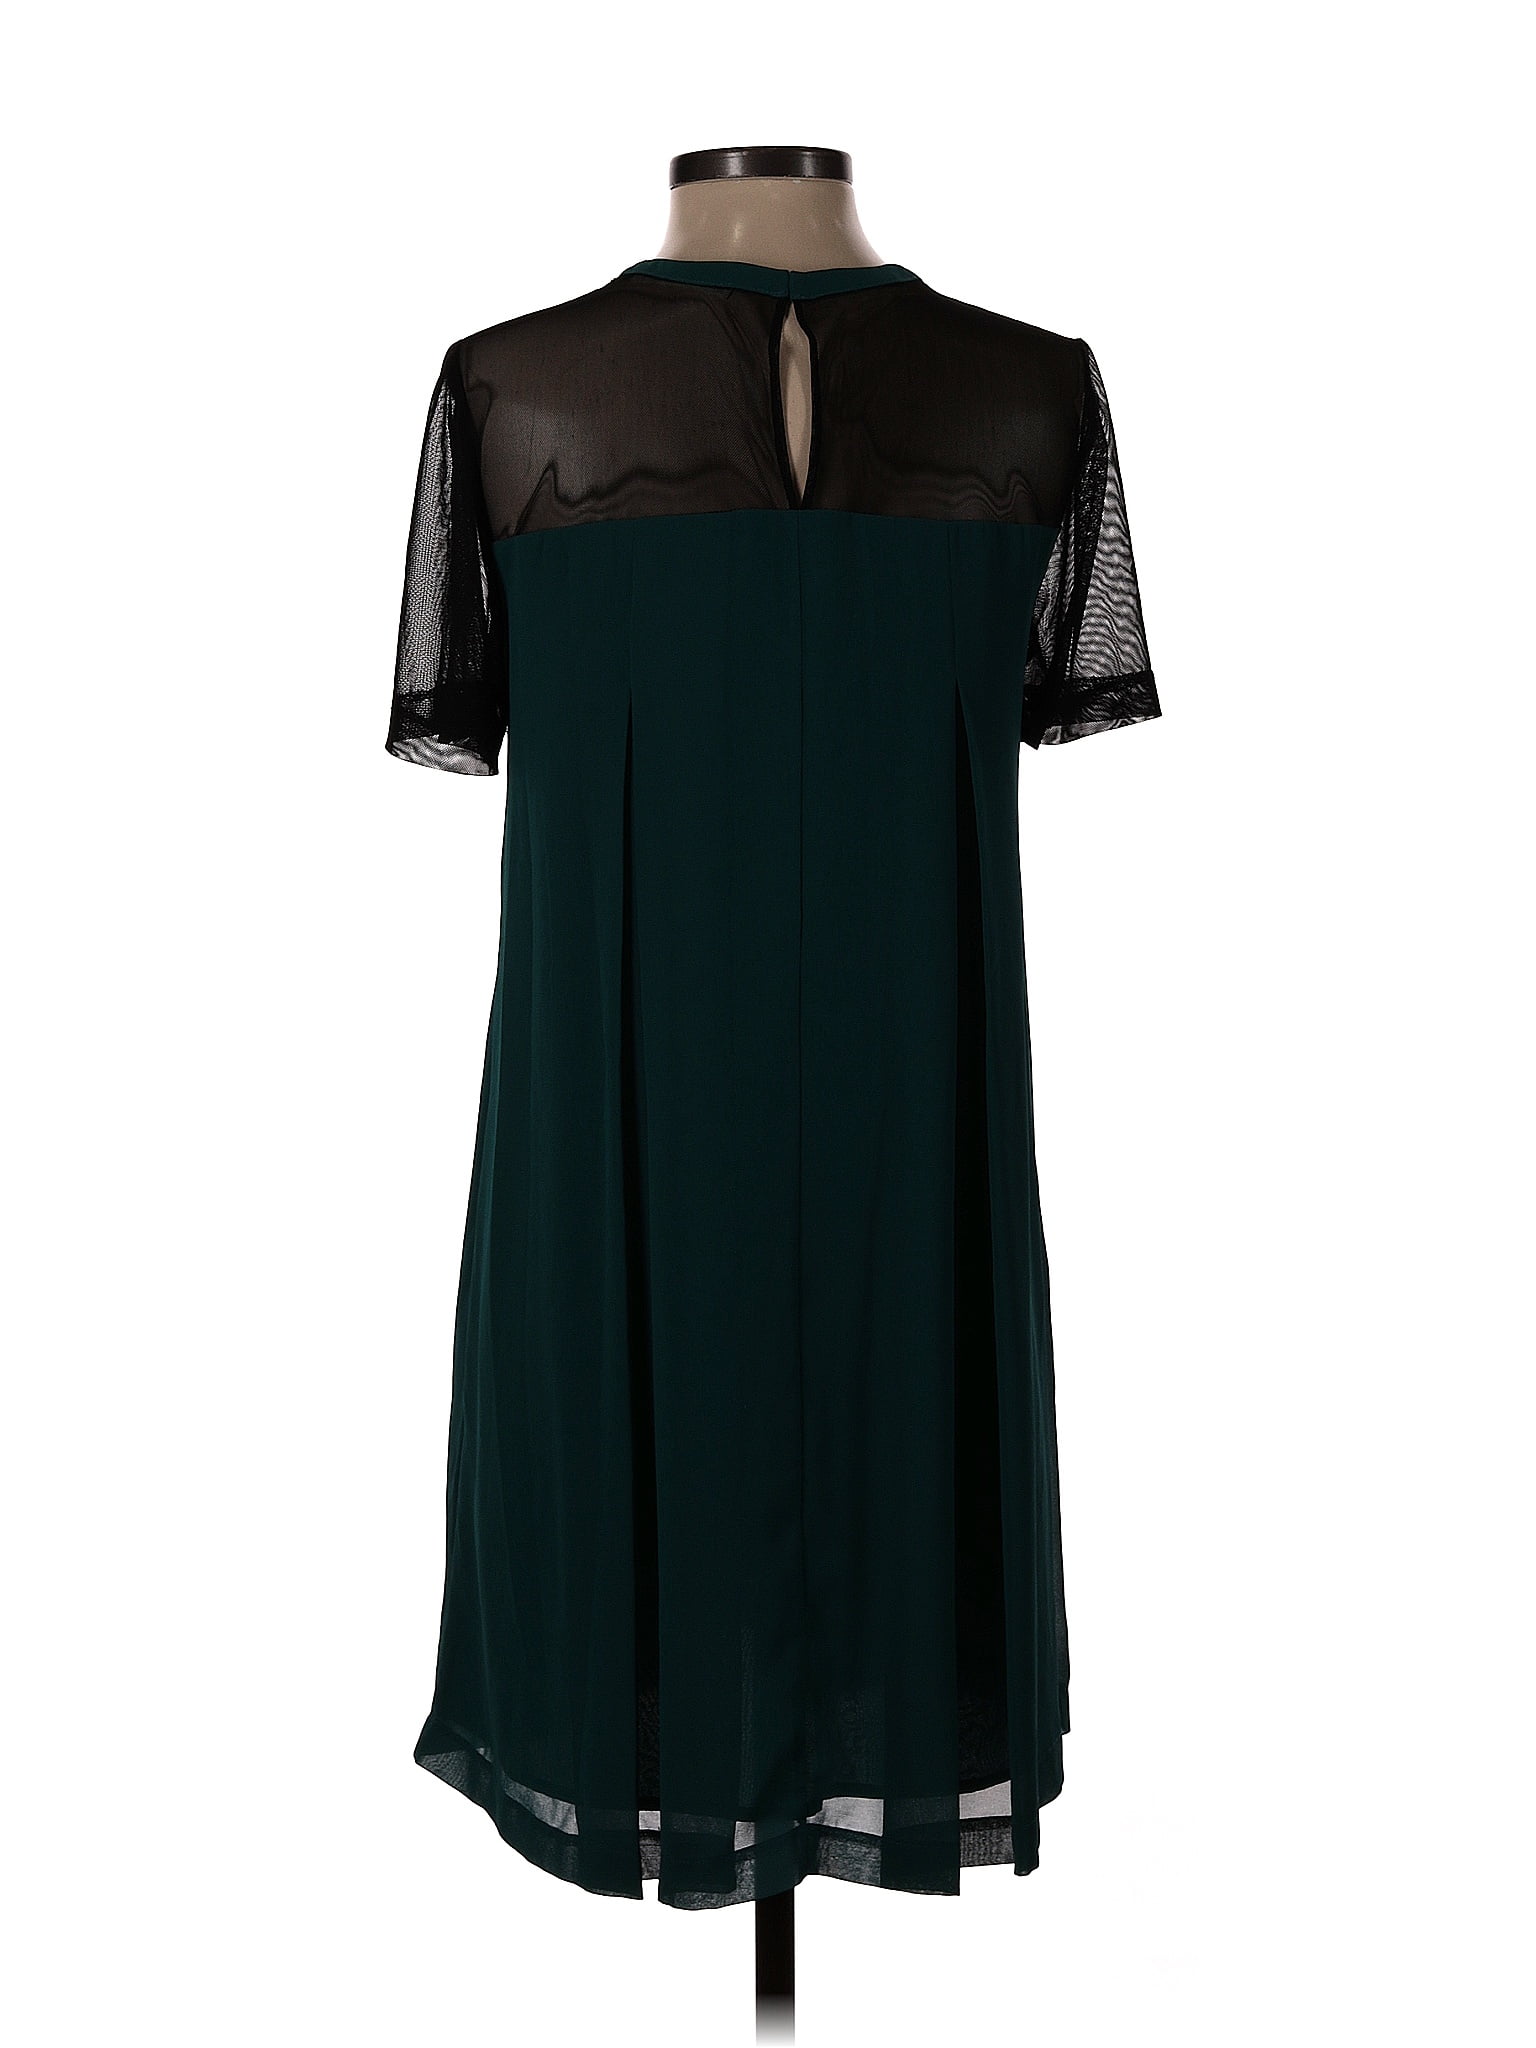 Lularoe Solid Black Casual Dress Size 2X (Plus) - 54% off